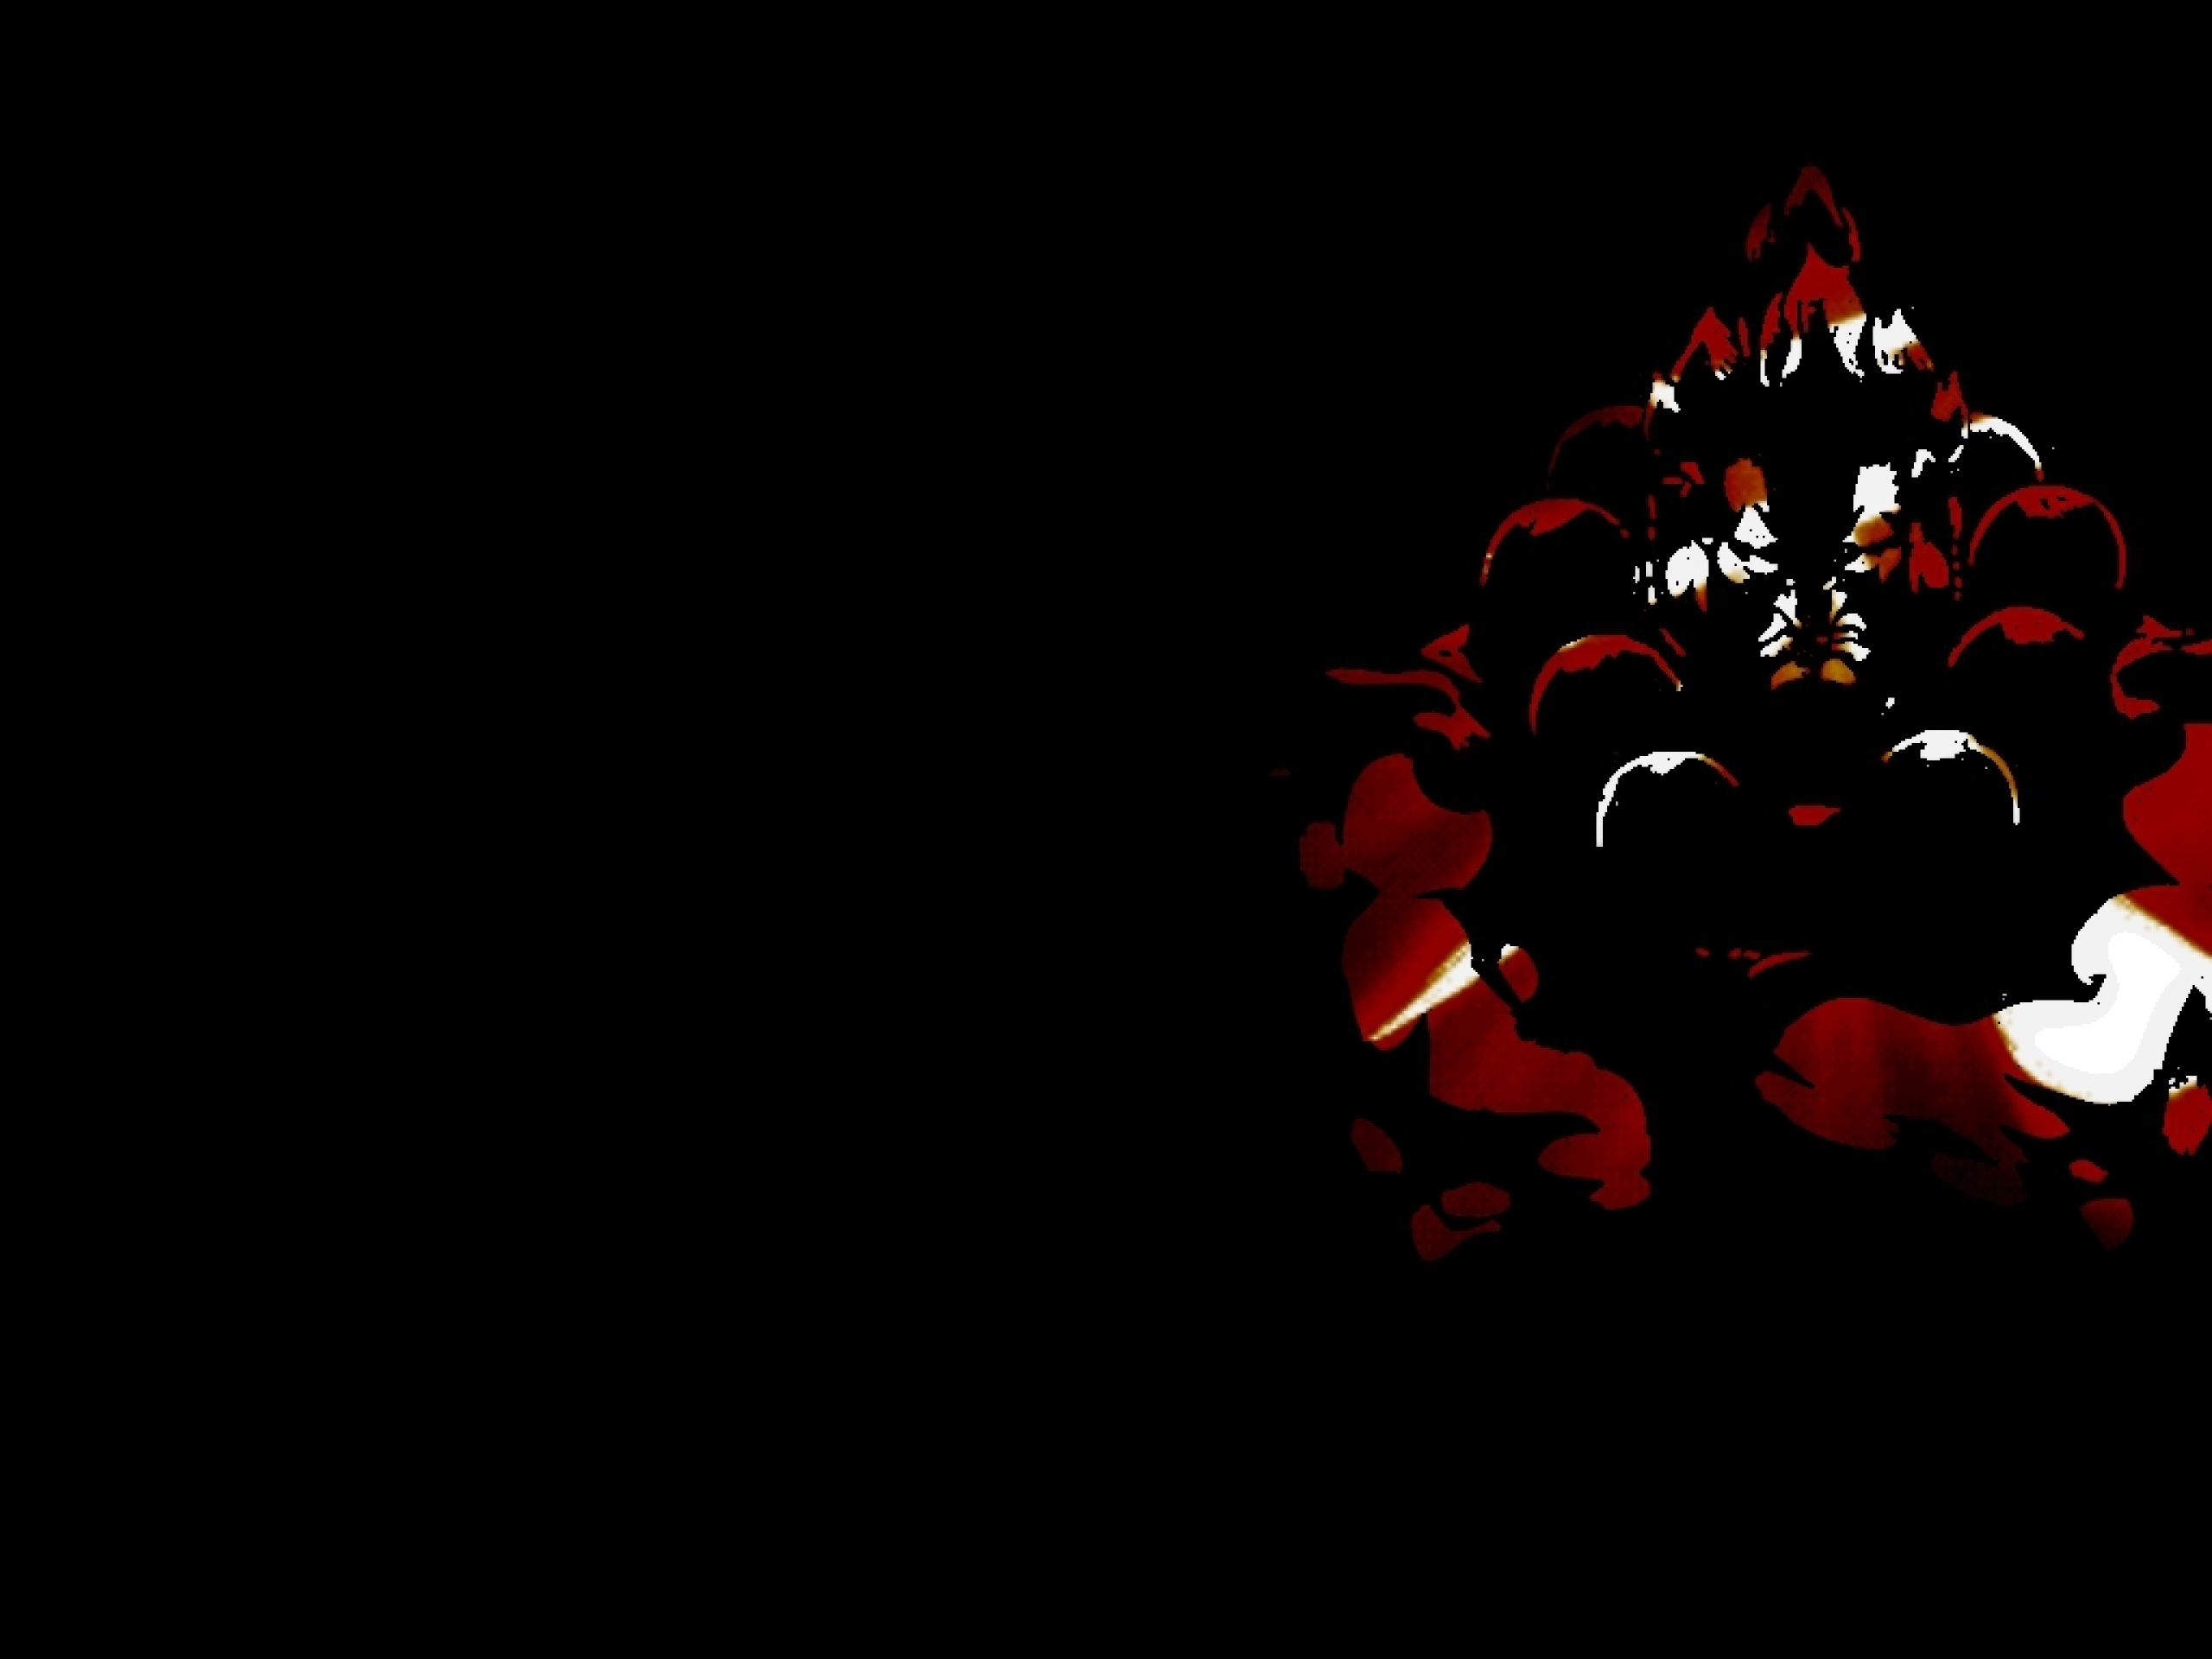 Akuma Street Fighter Background Free Download | PixelsTalk.Net